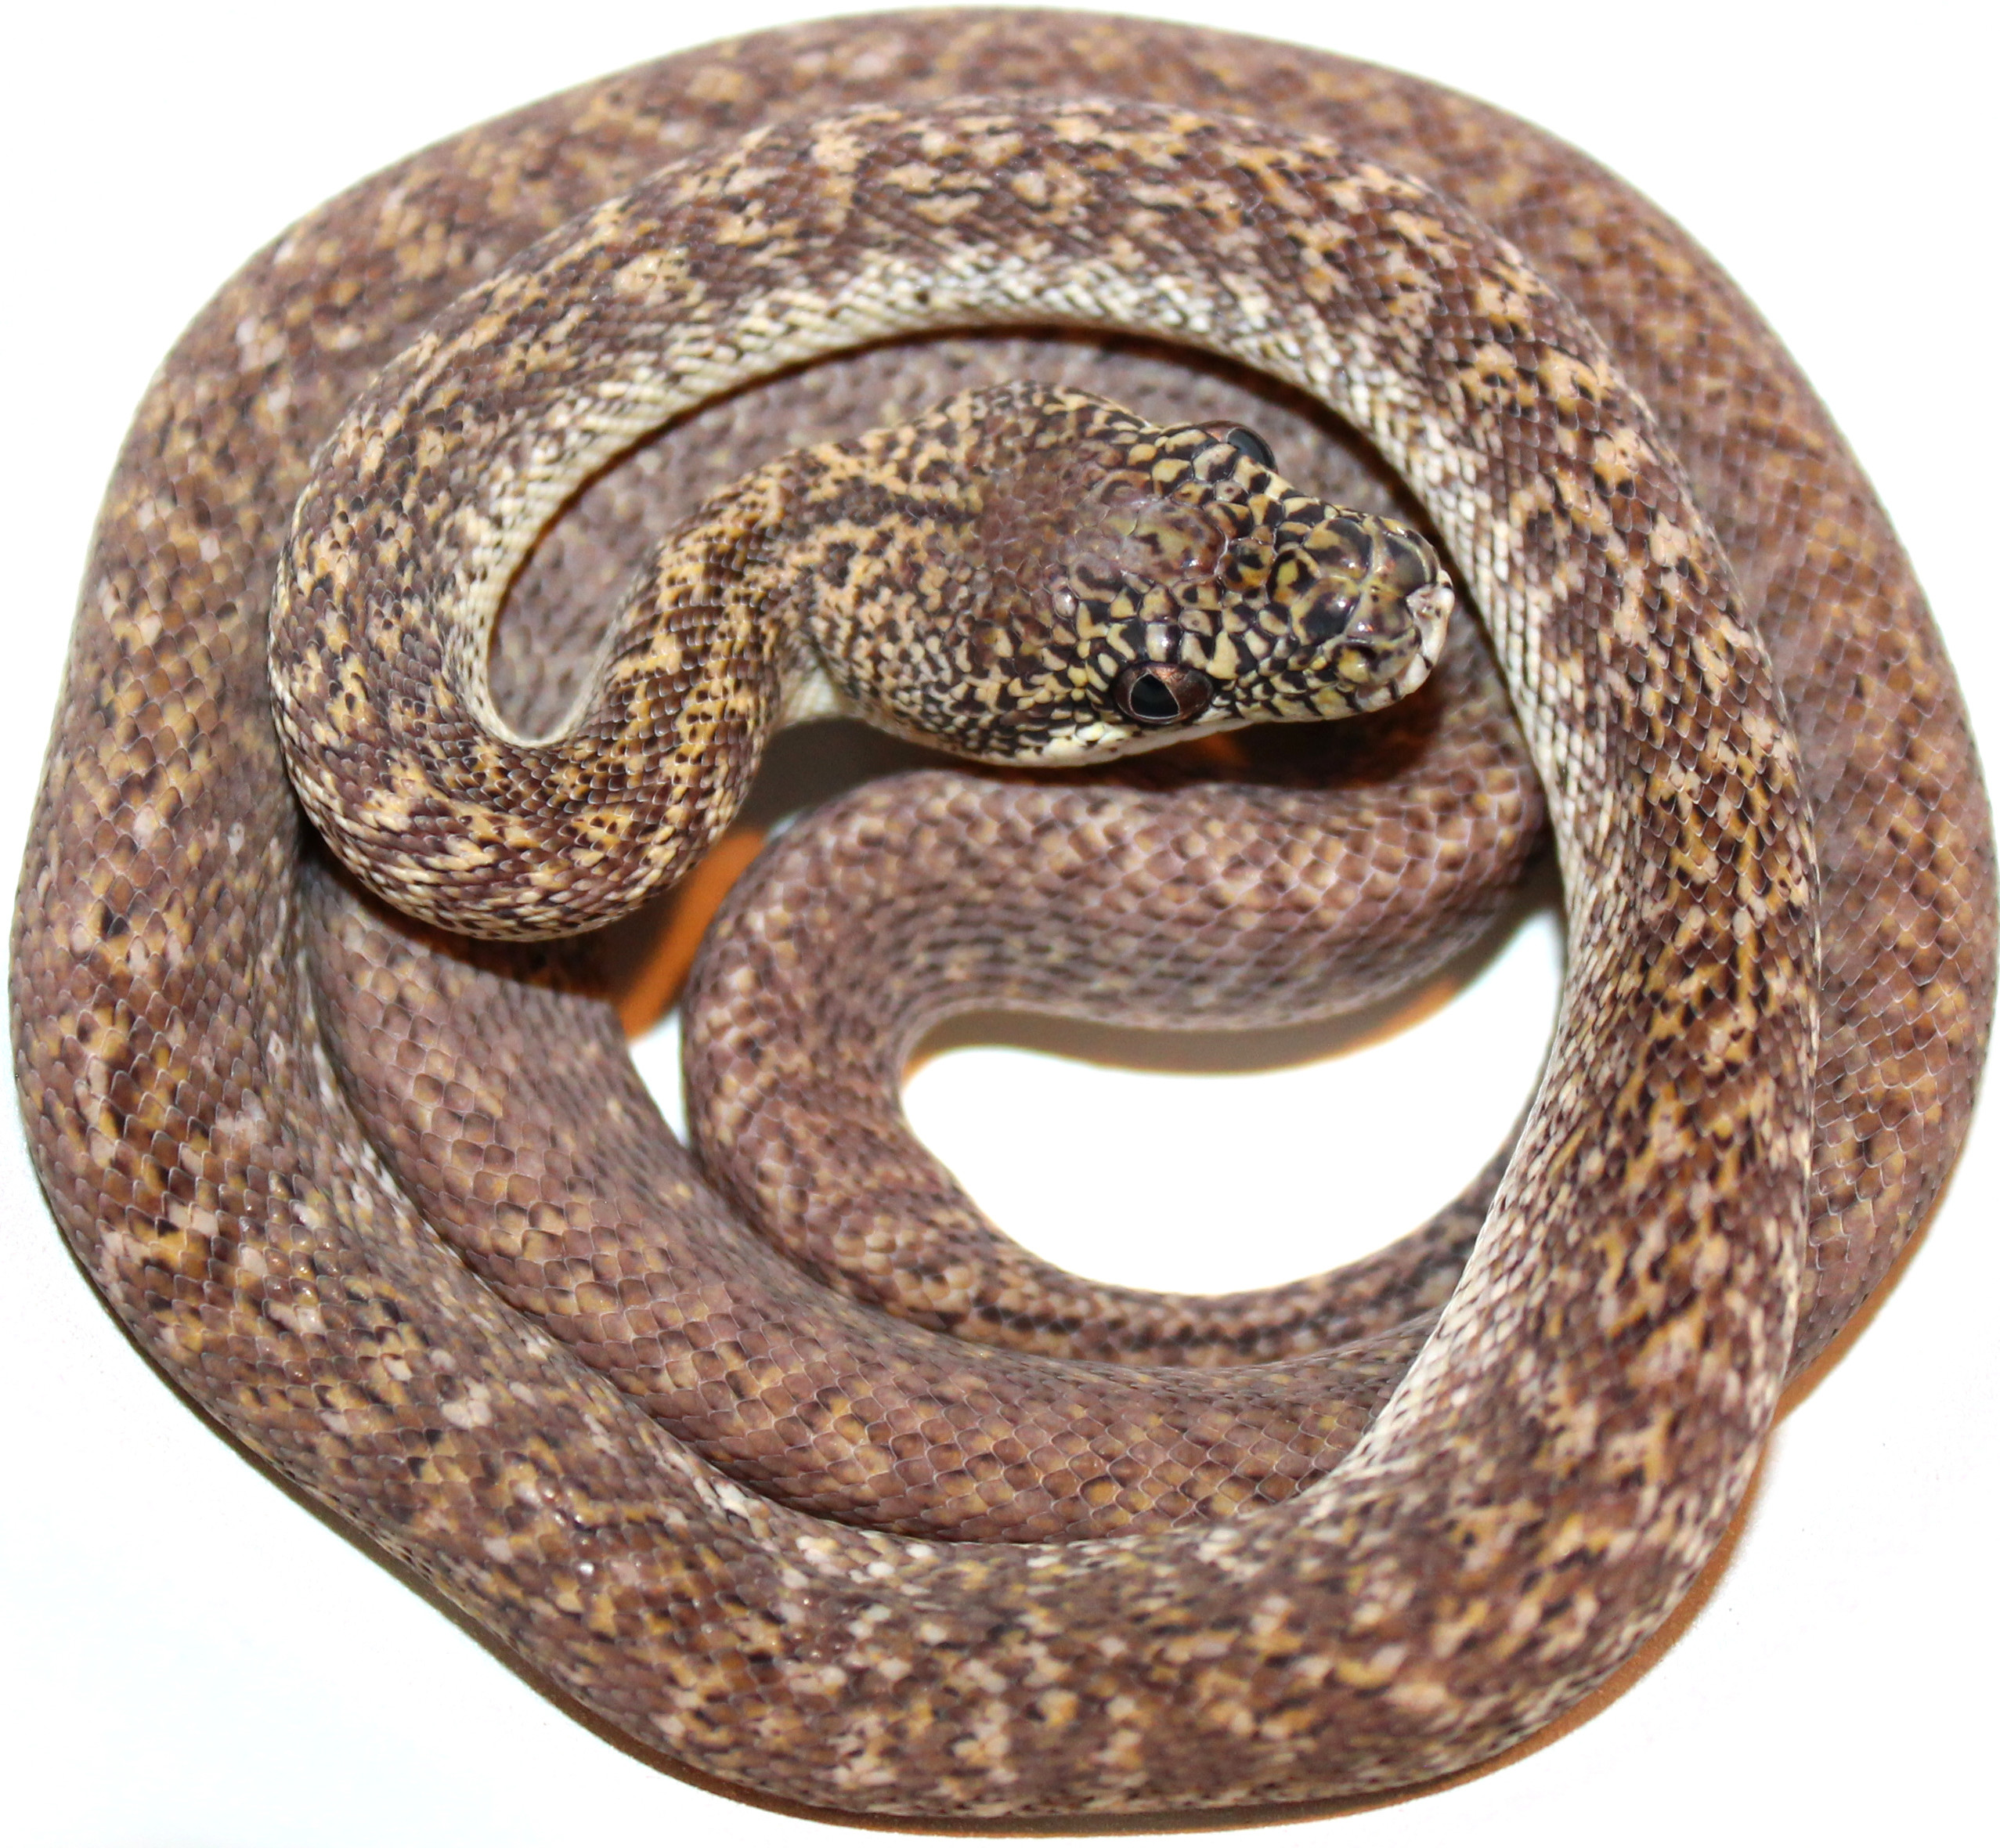 Female Granite Irian Jaya Carpet Python by Inland Reptile